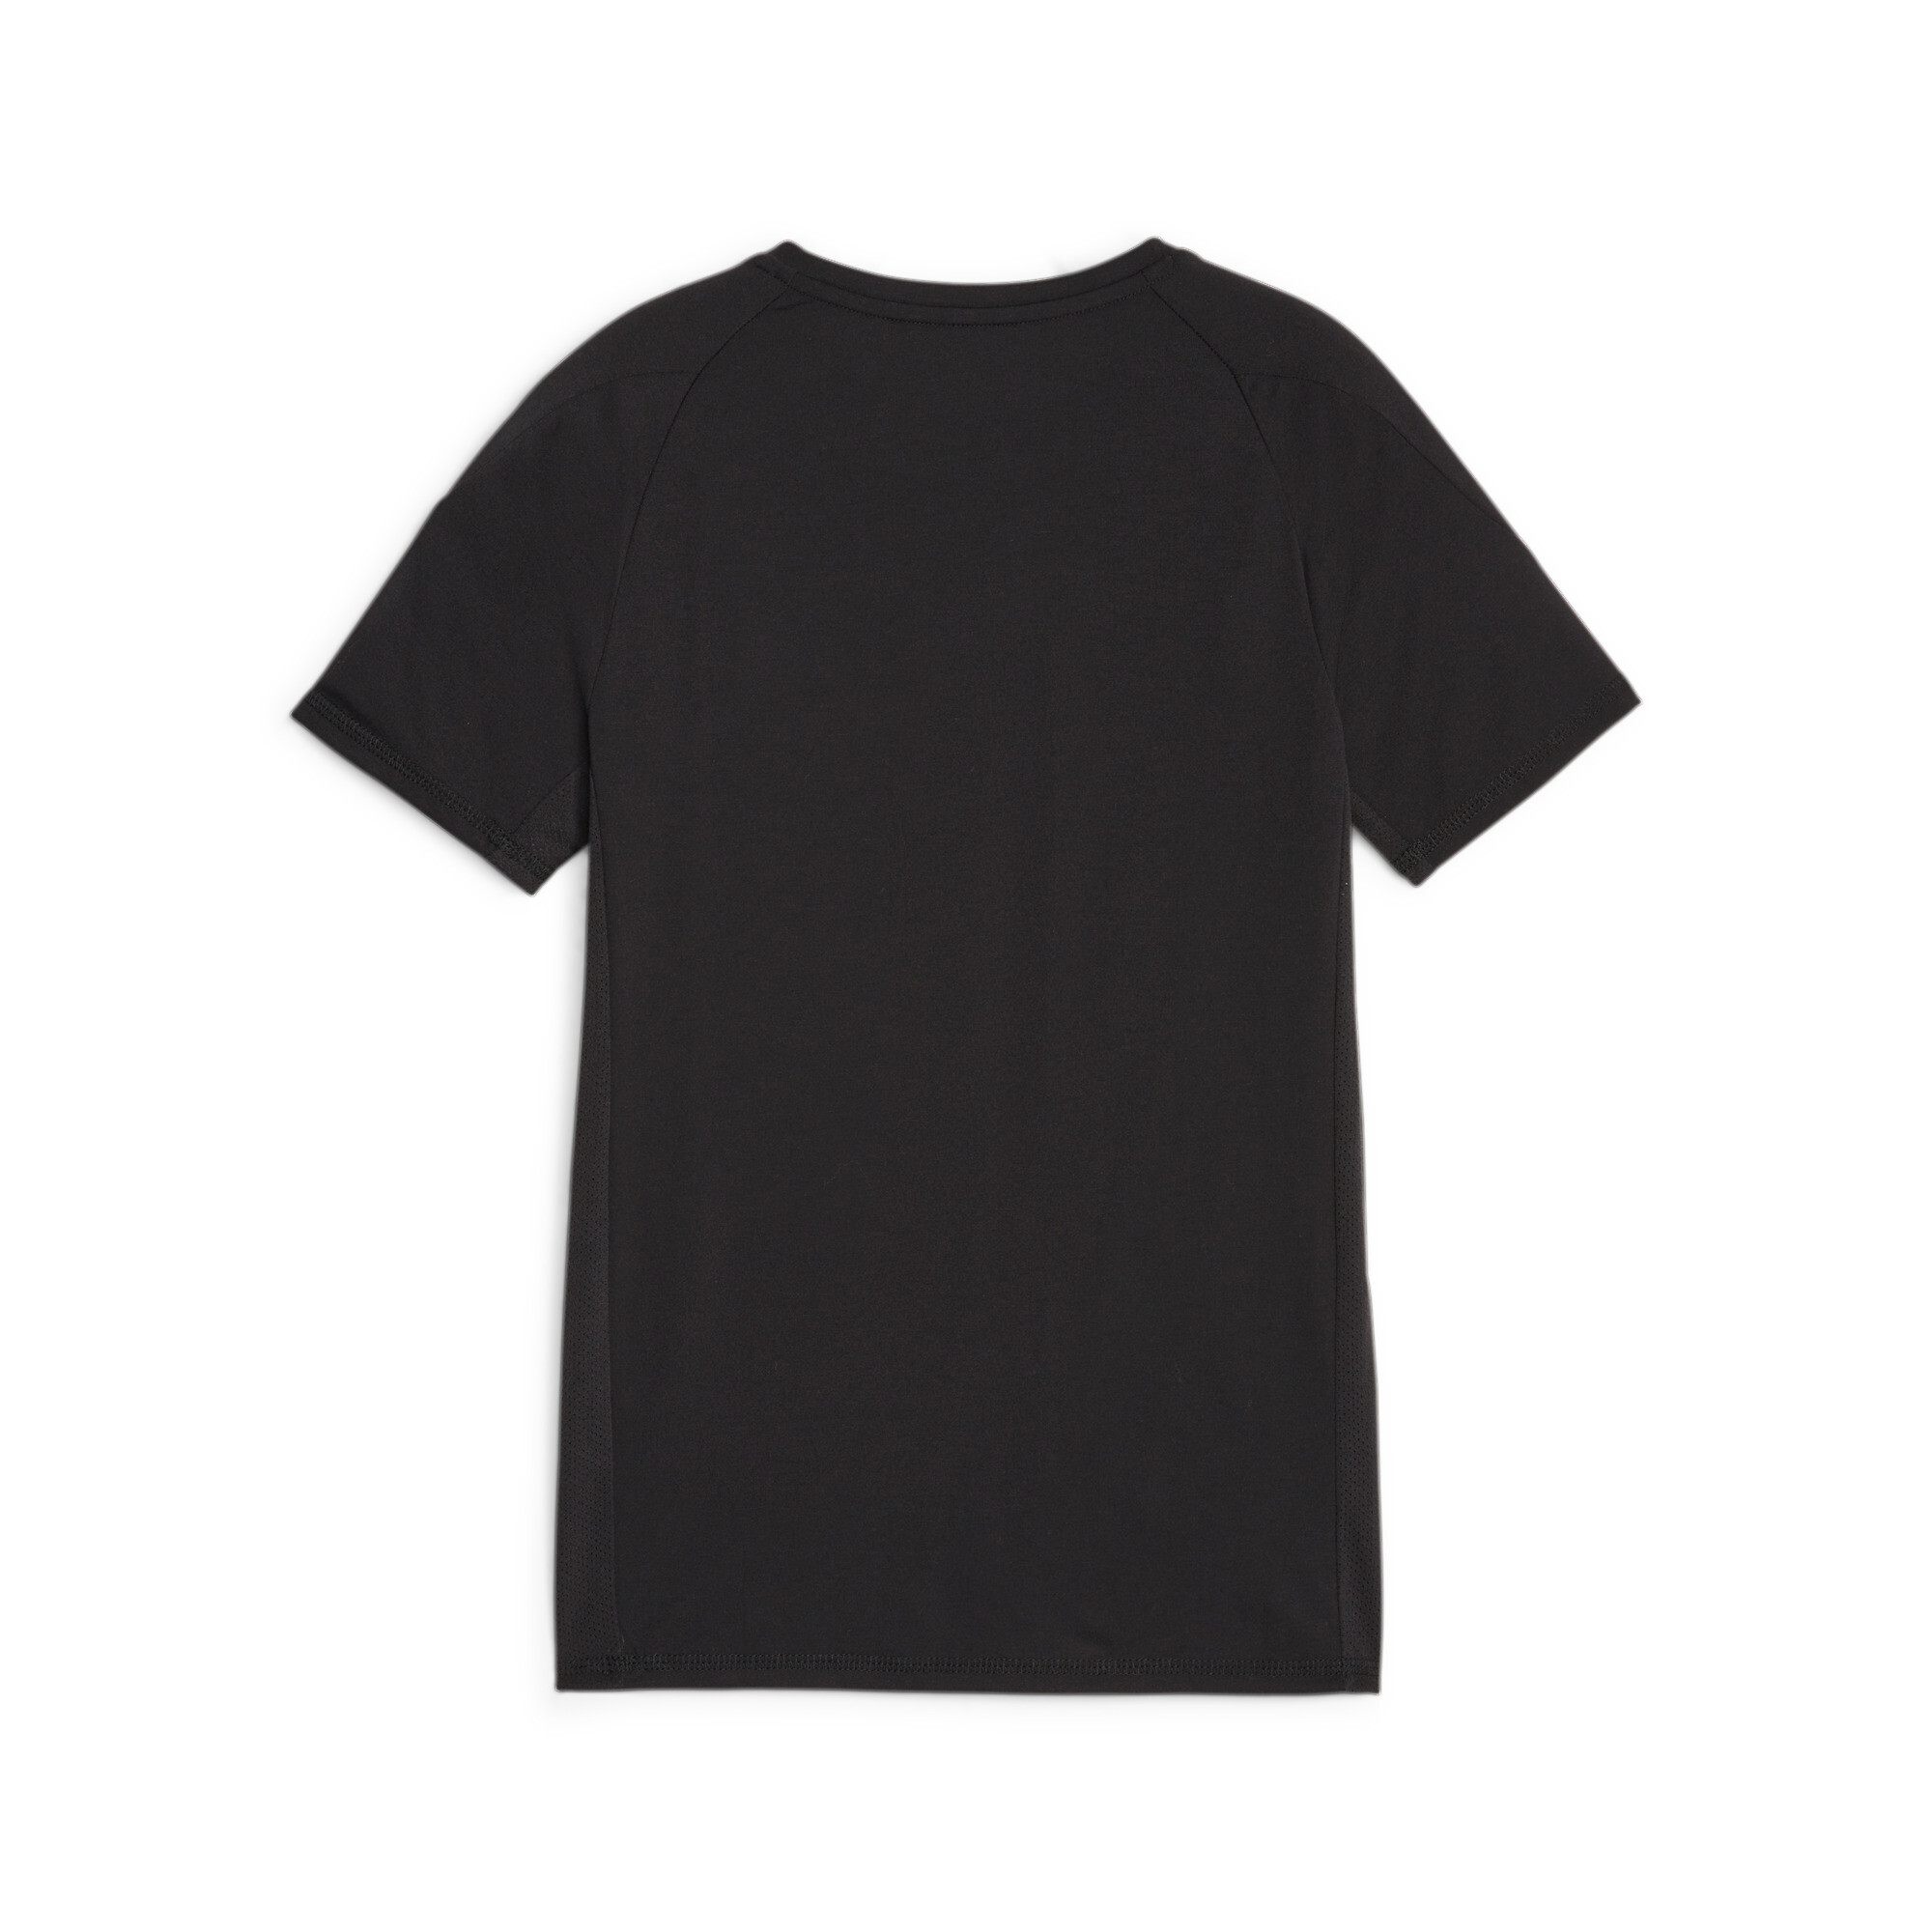 PUMA Evostripe T-Shirt In Black, Size 11-12 Youth